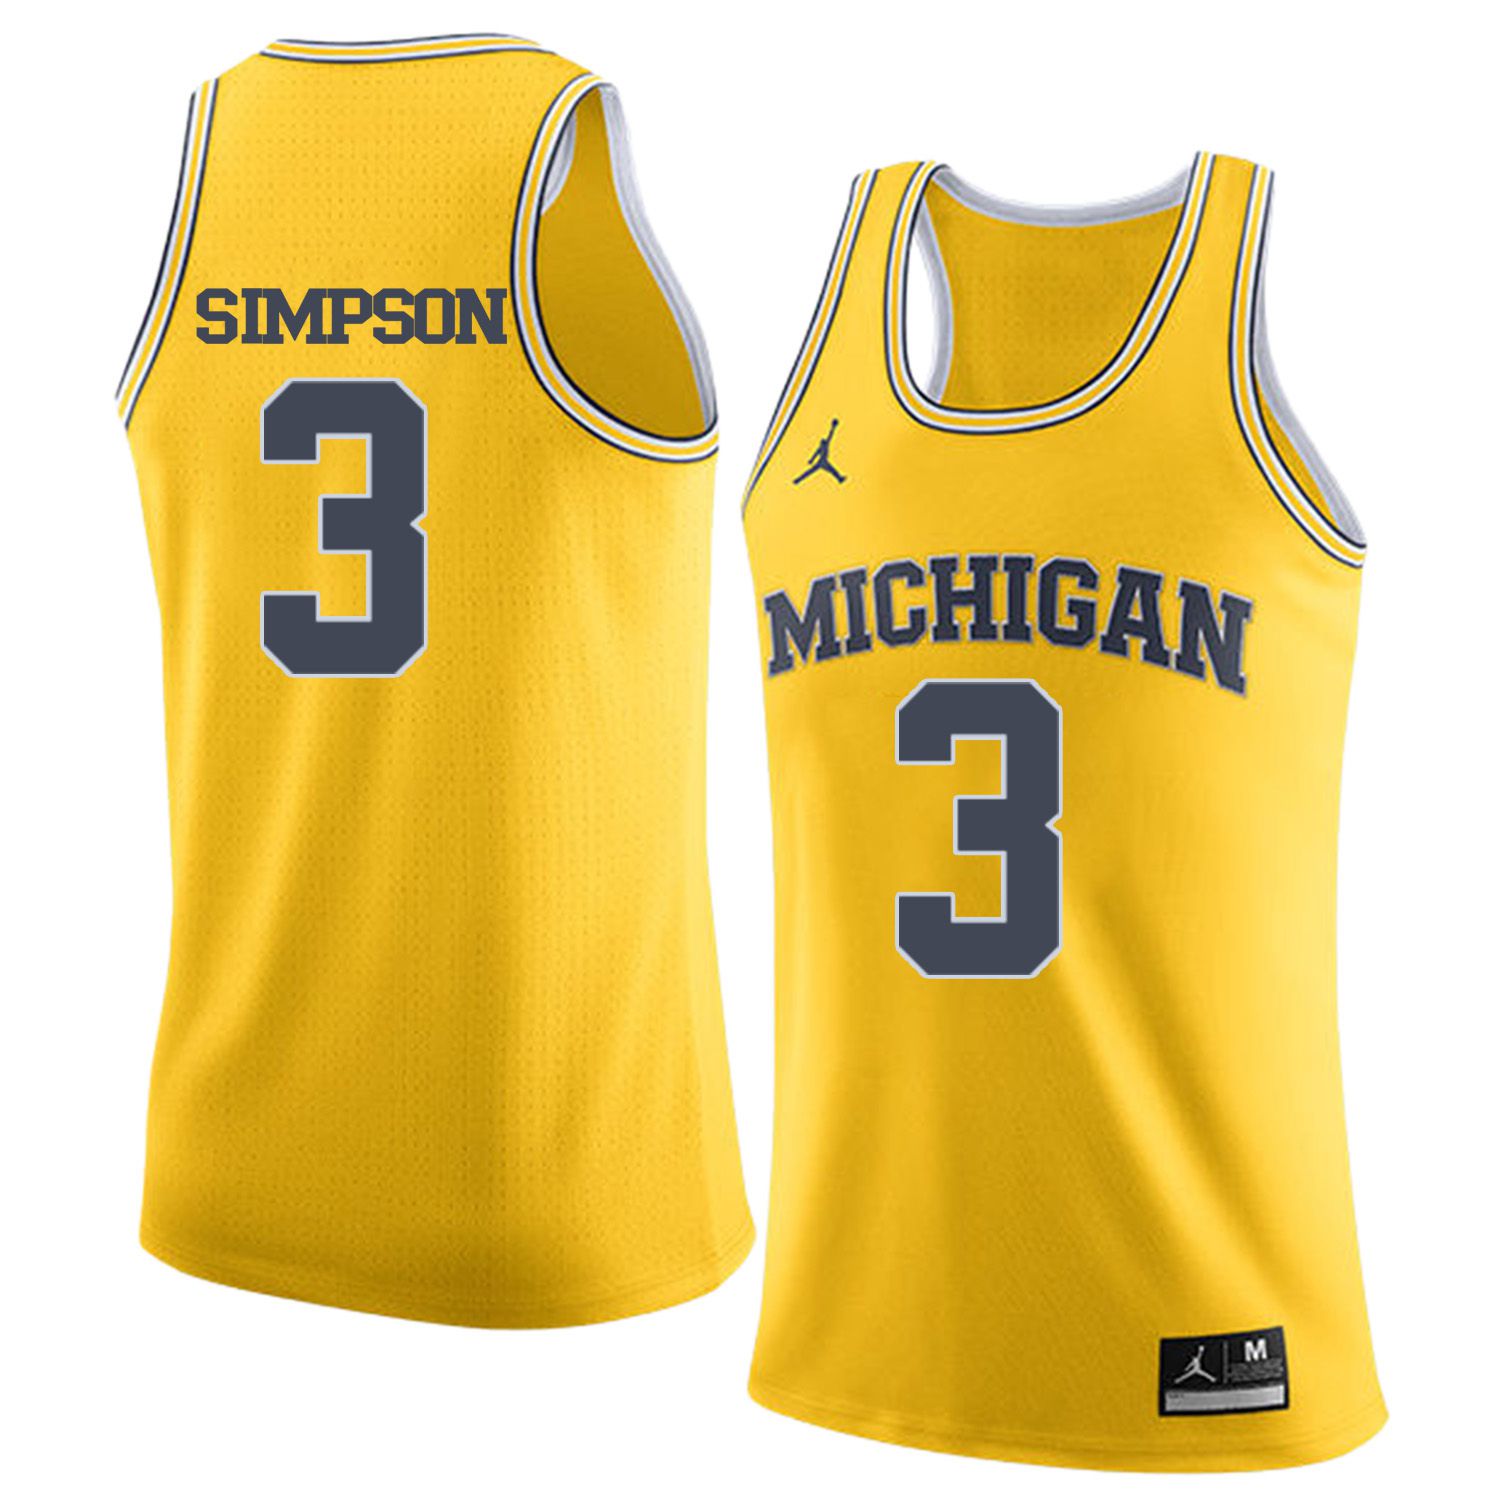 Men Jordan University of Michigan Basketball Yellow #3 Simpson Customized NCAA Jerseys